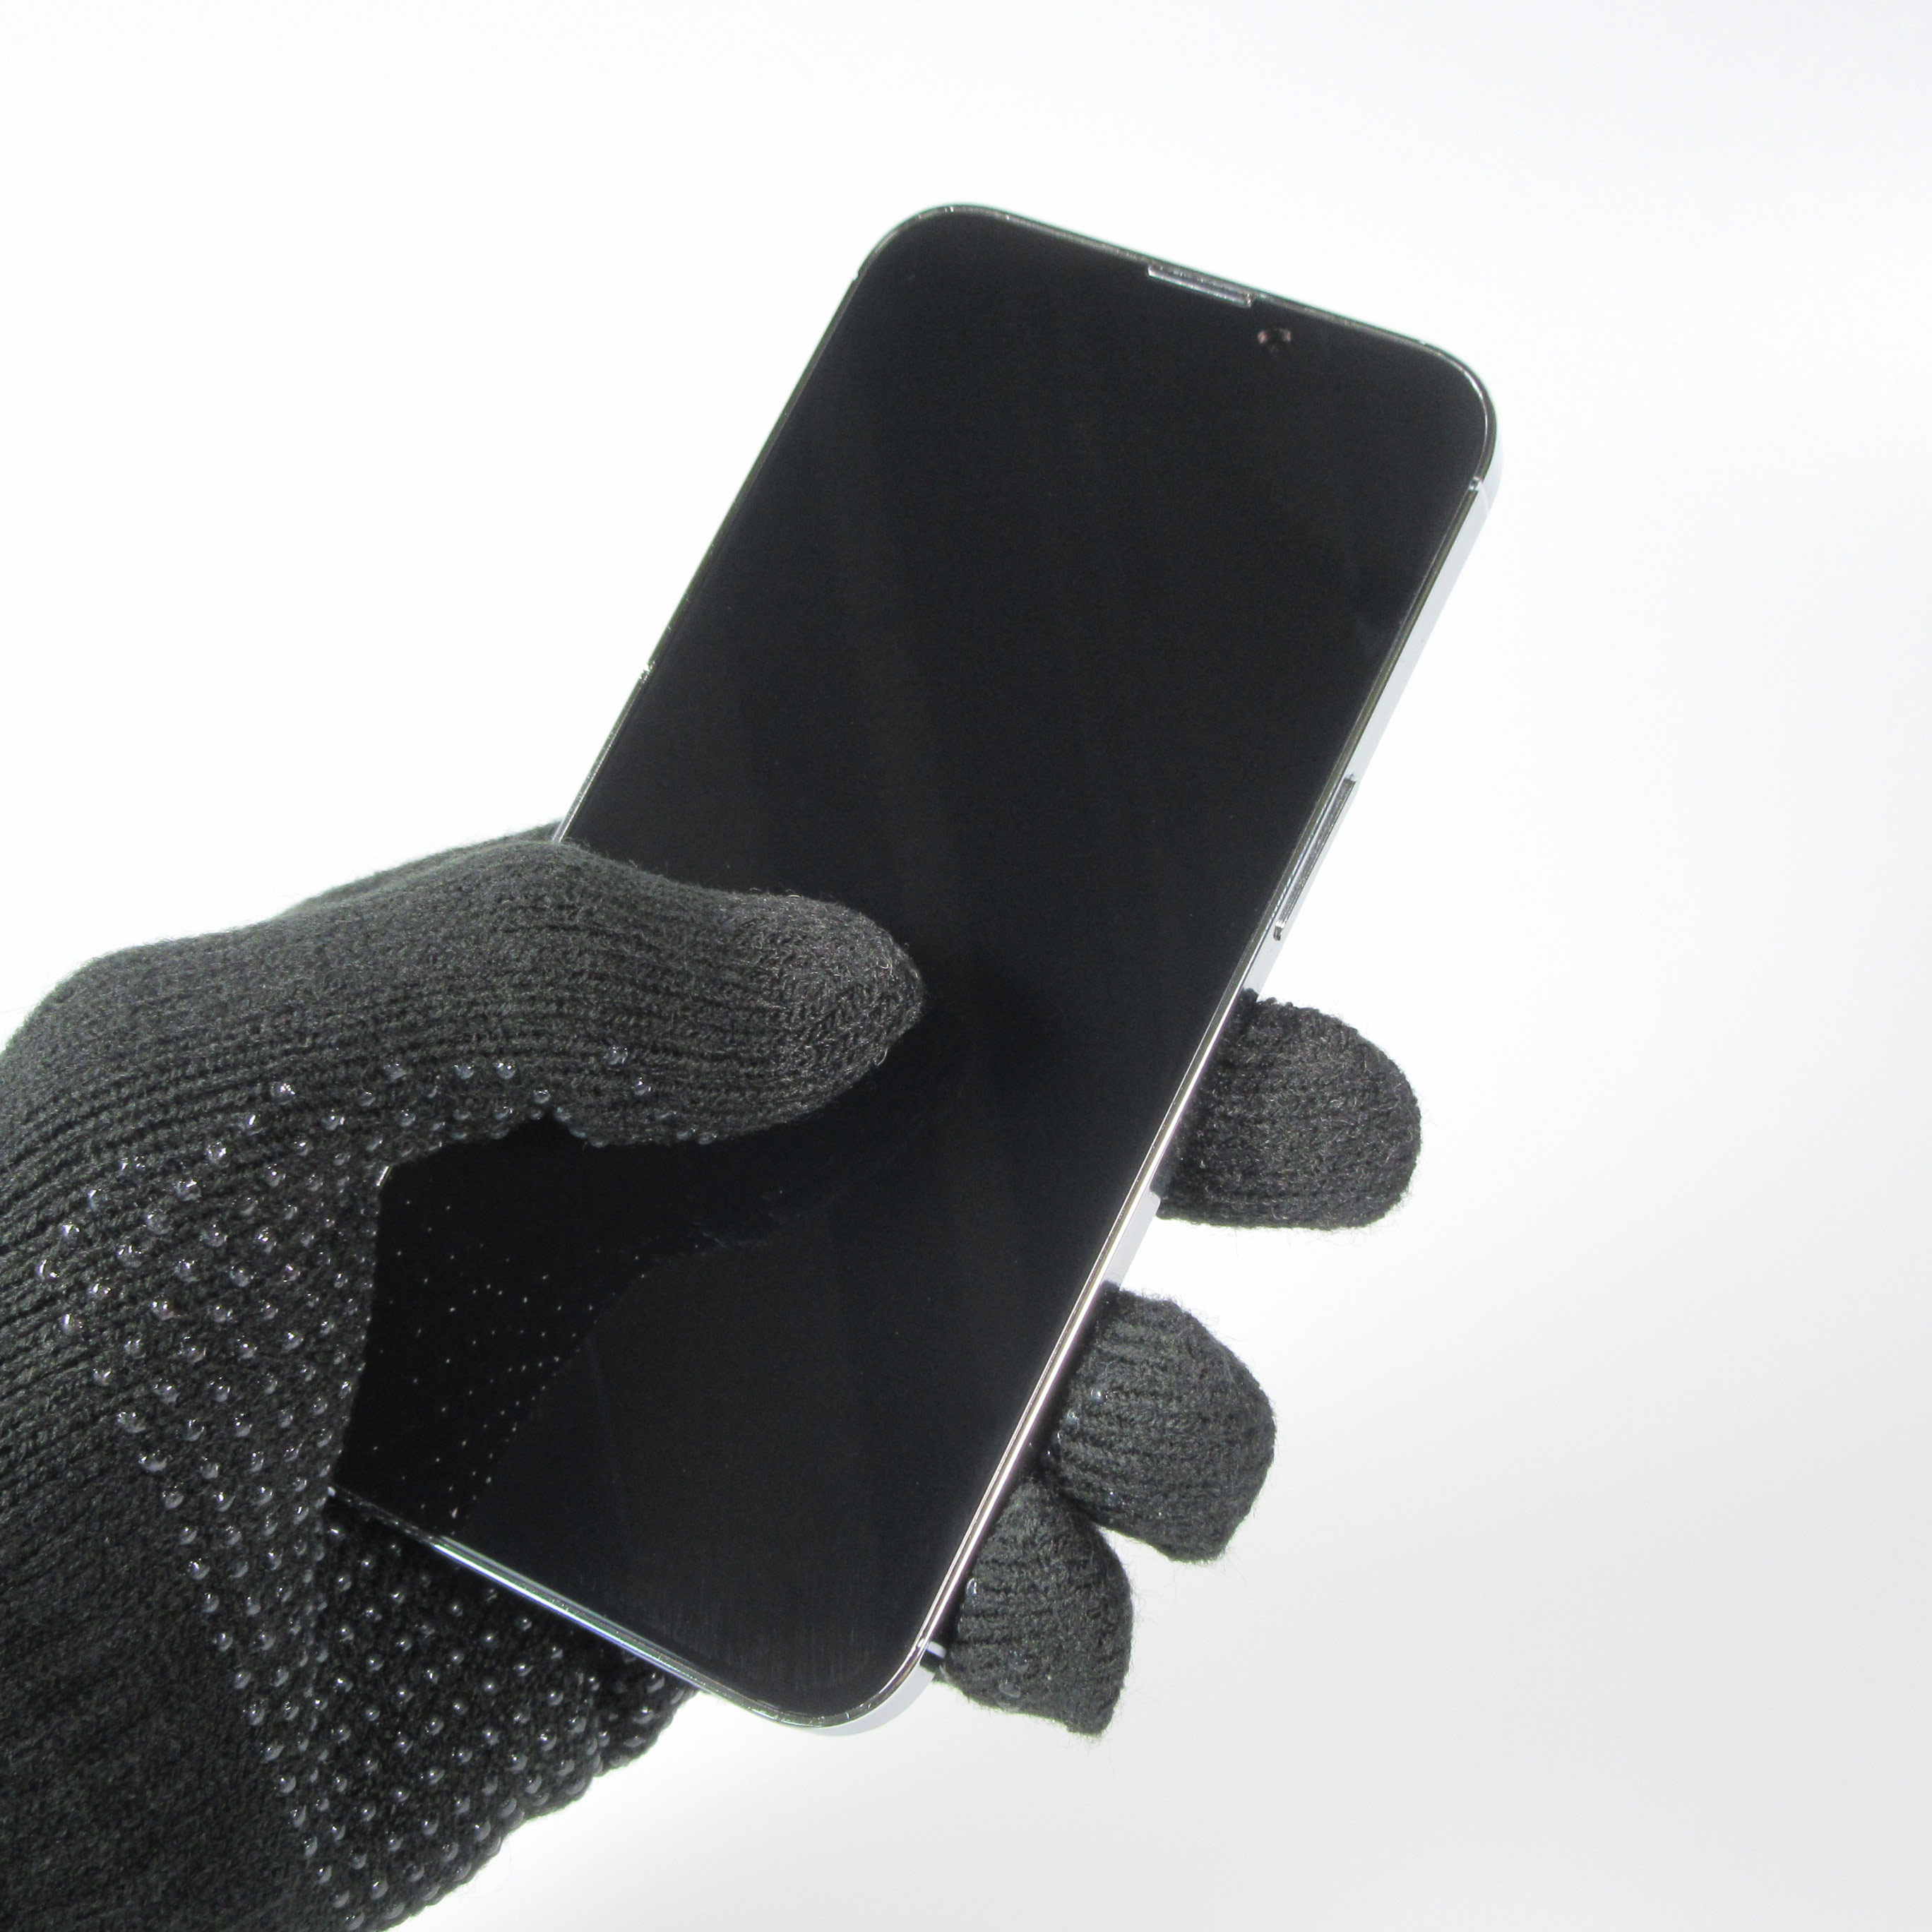 Gants tactiles pour iPhone, iPad, iPod, et Smartphone